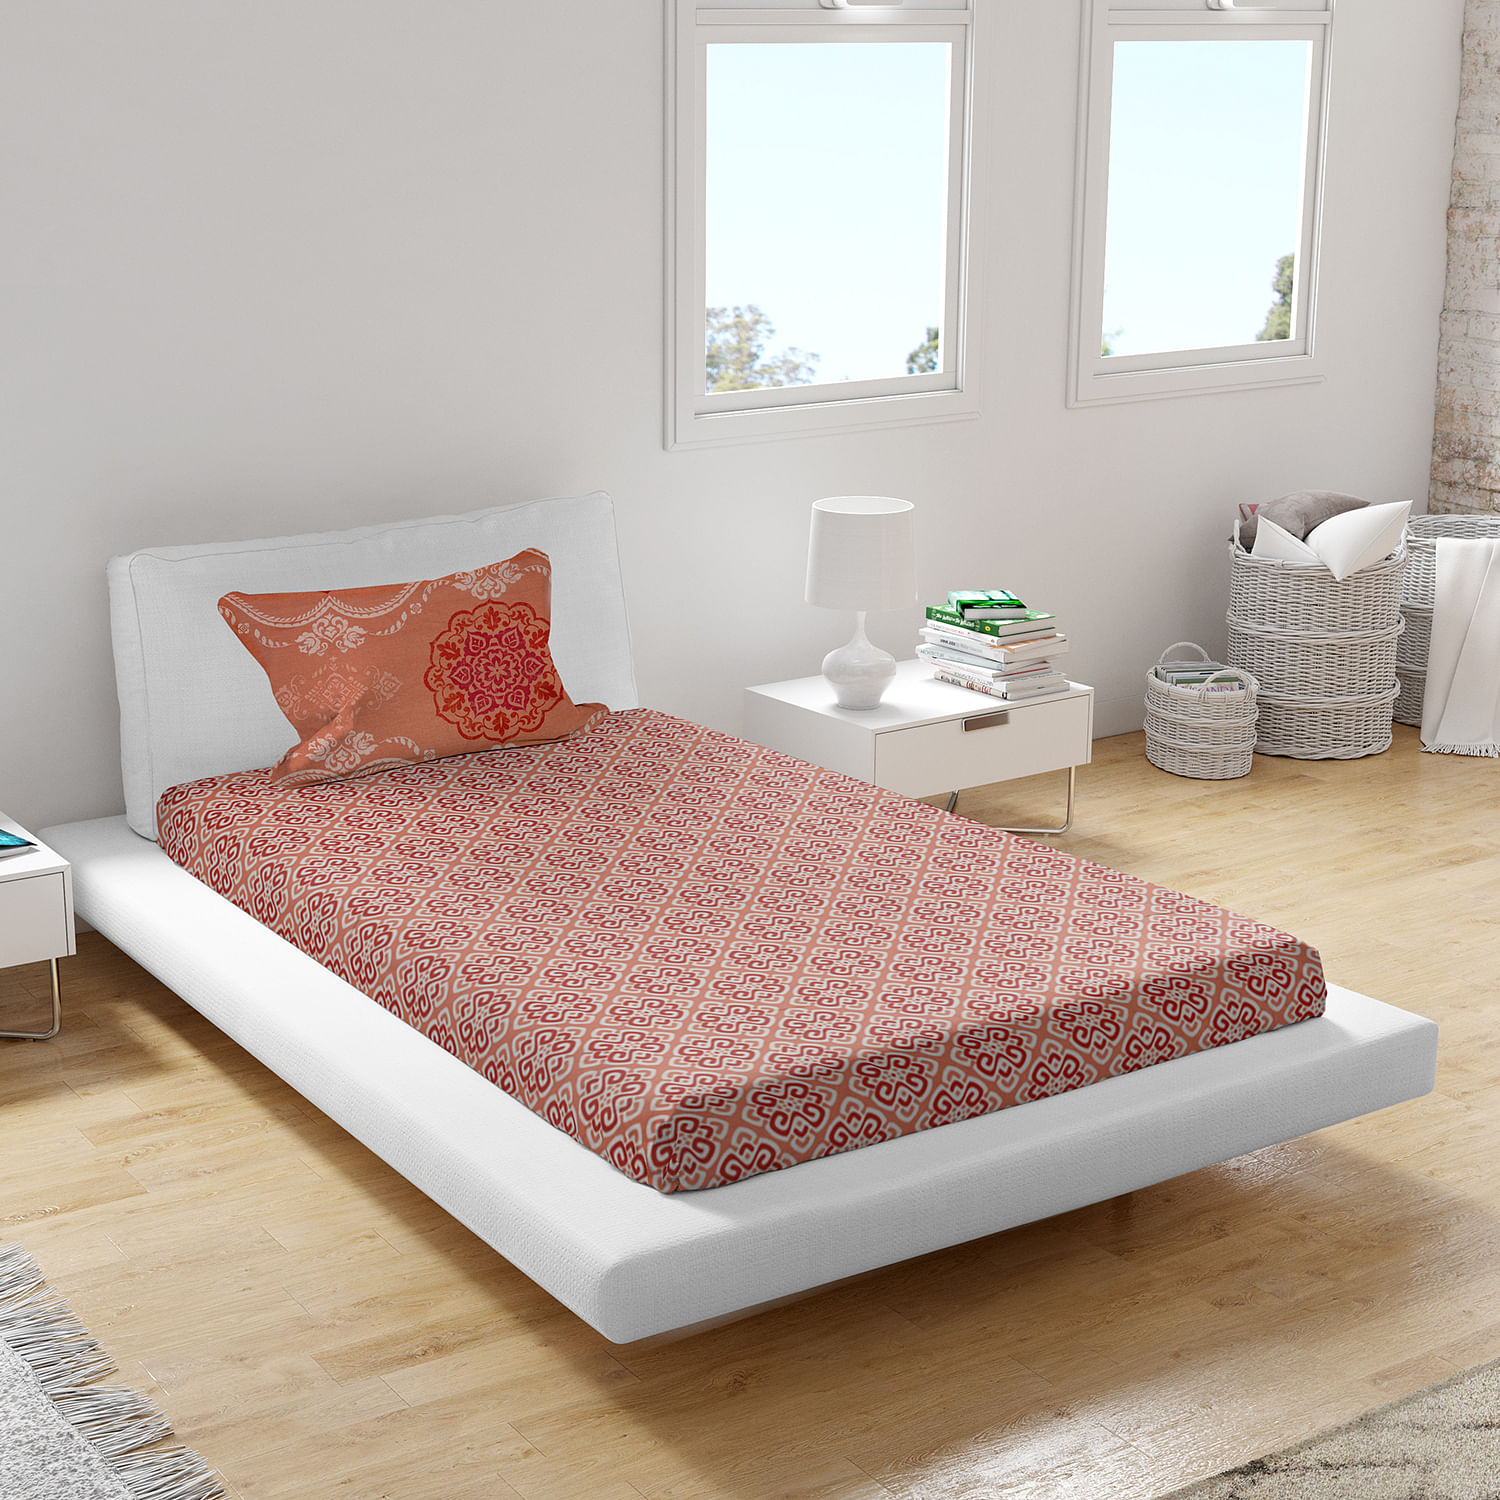 Emilia Cotton Satin Single Bed Sheet 152X228 CM in Rust Colour